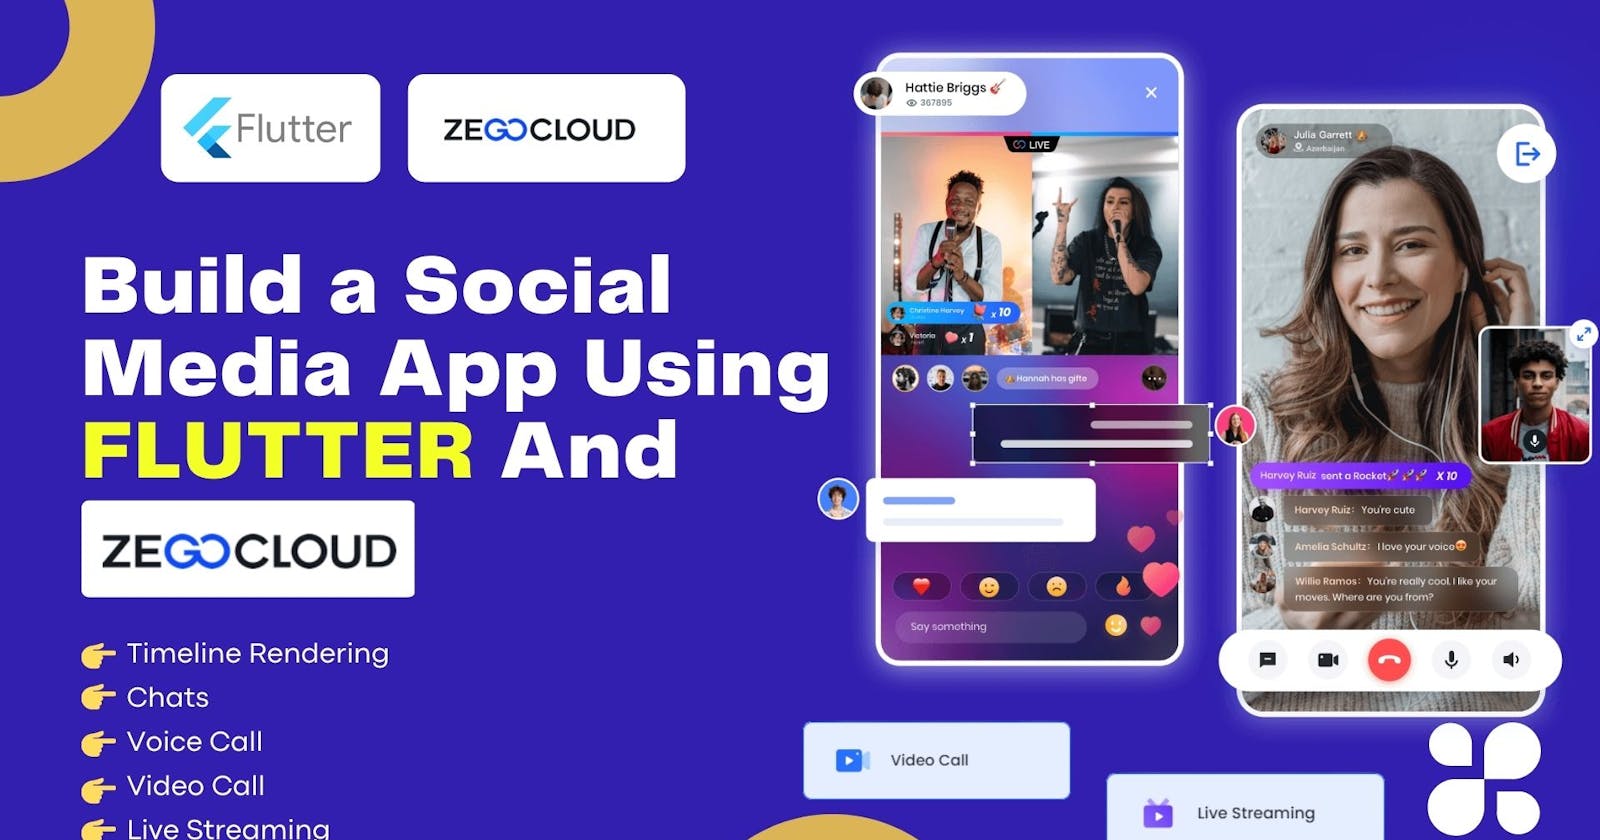 Audio Call App in Flutter in 5 Mins - Using ZegoCloud